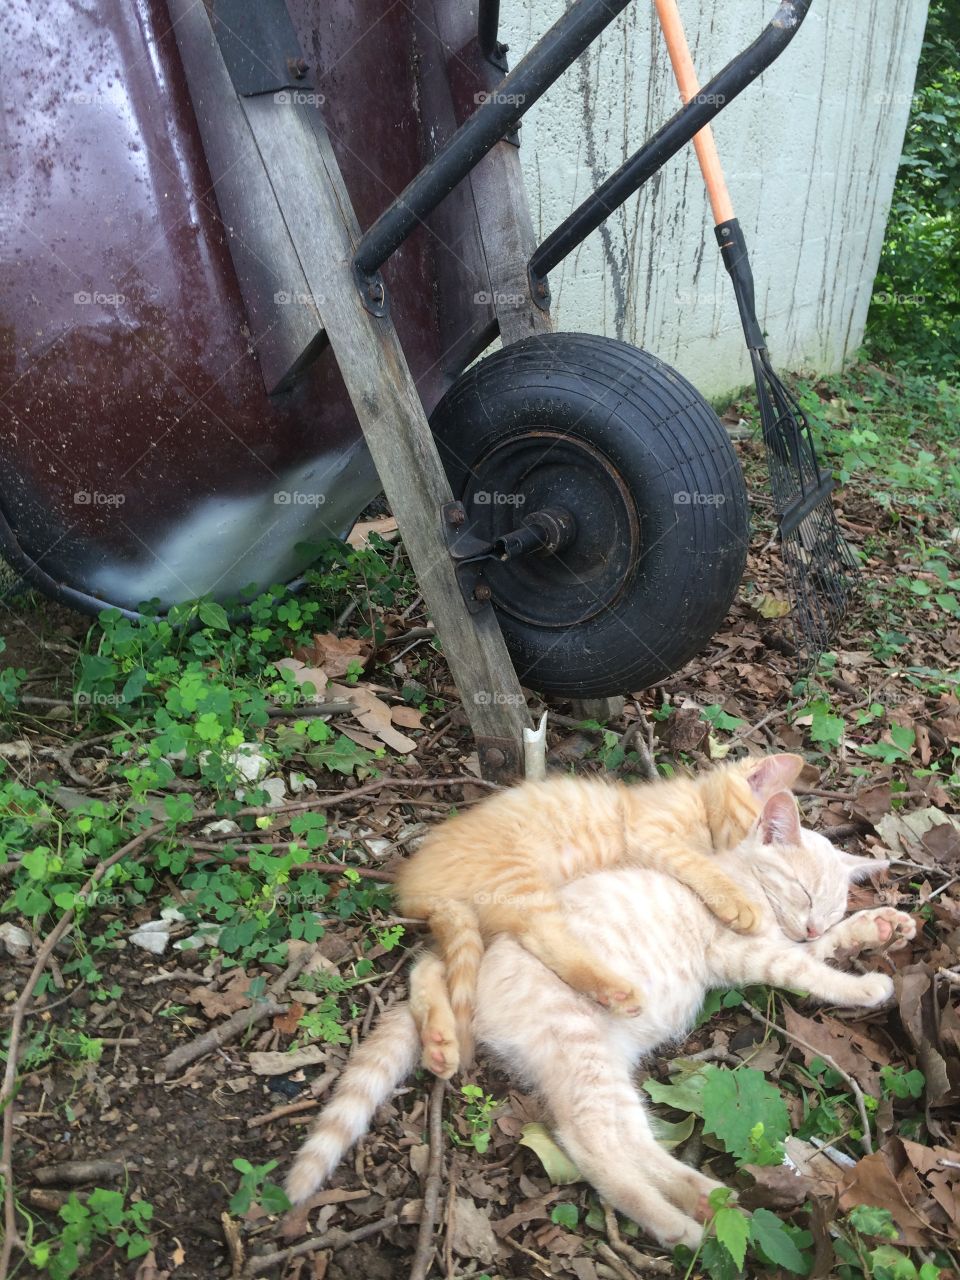 Yard work kitties